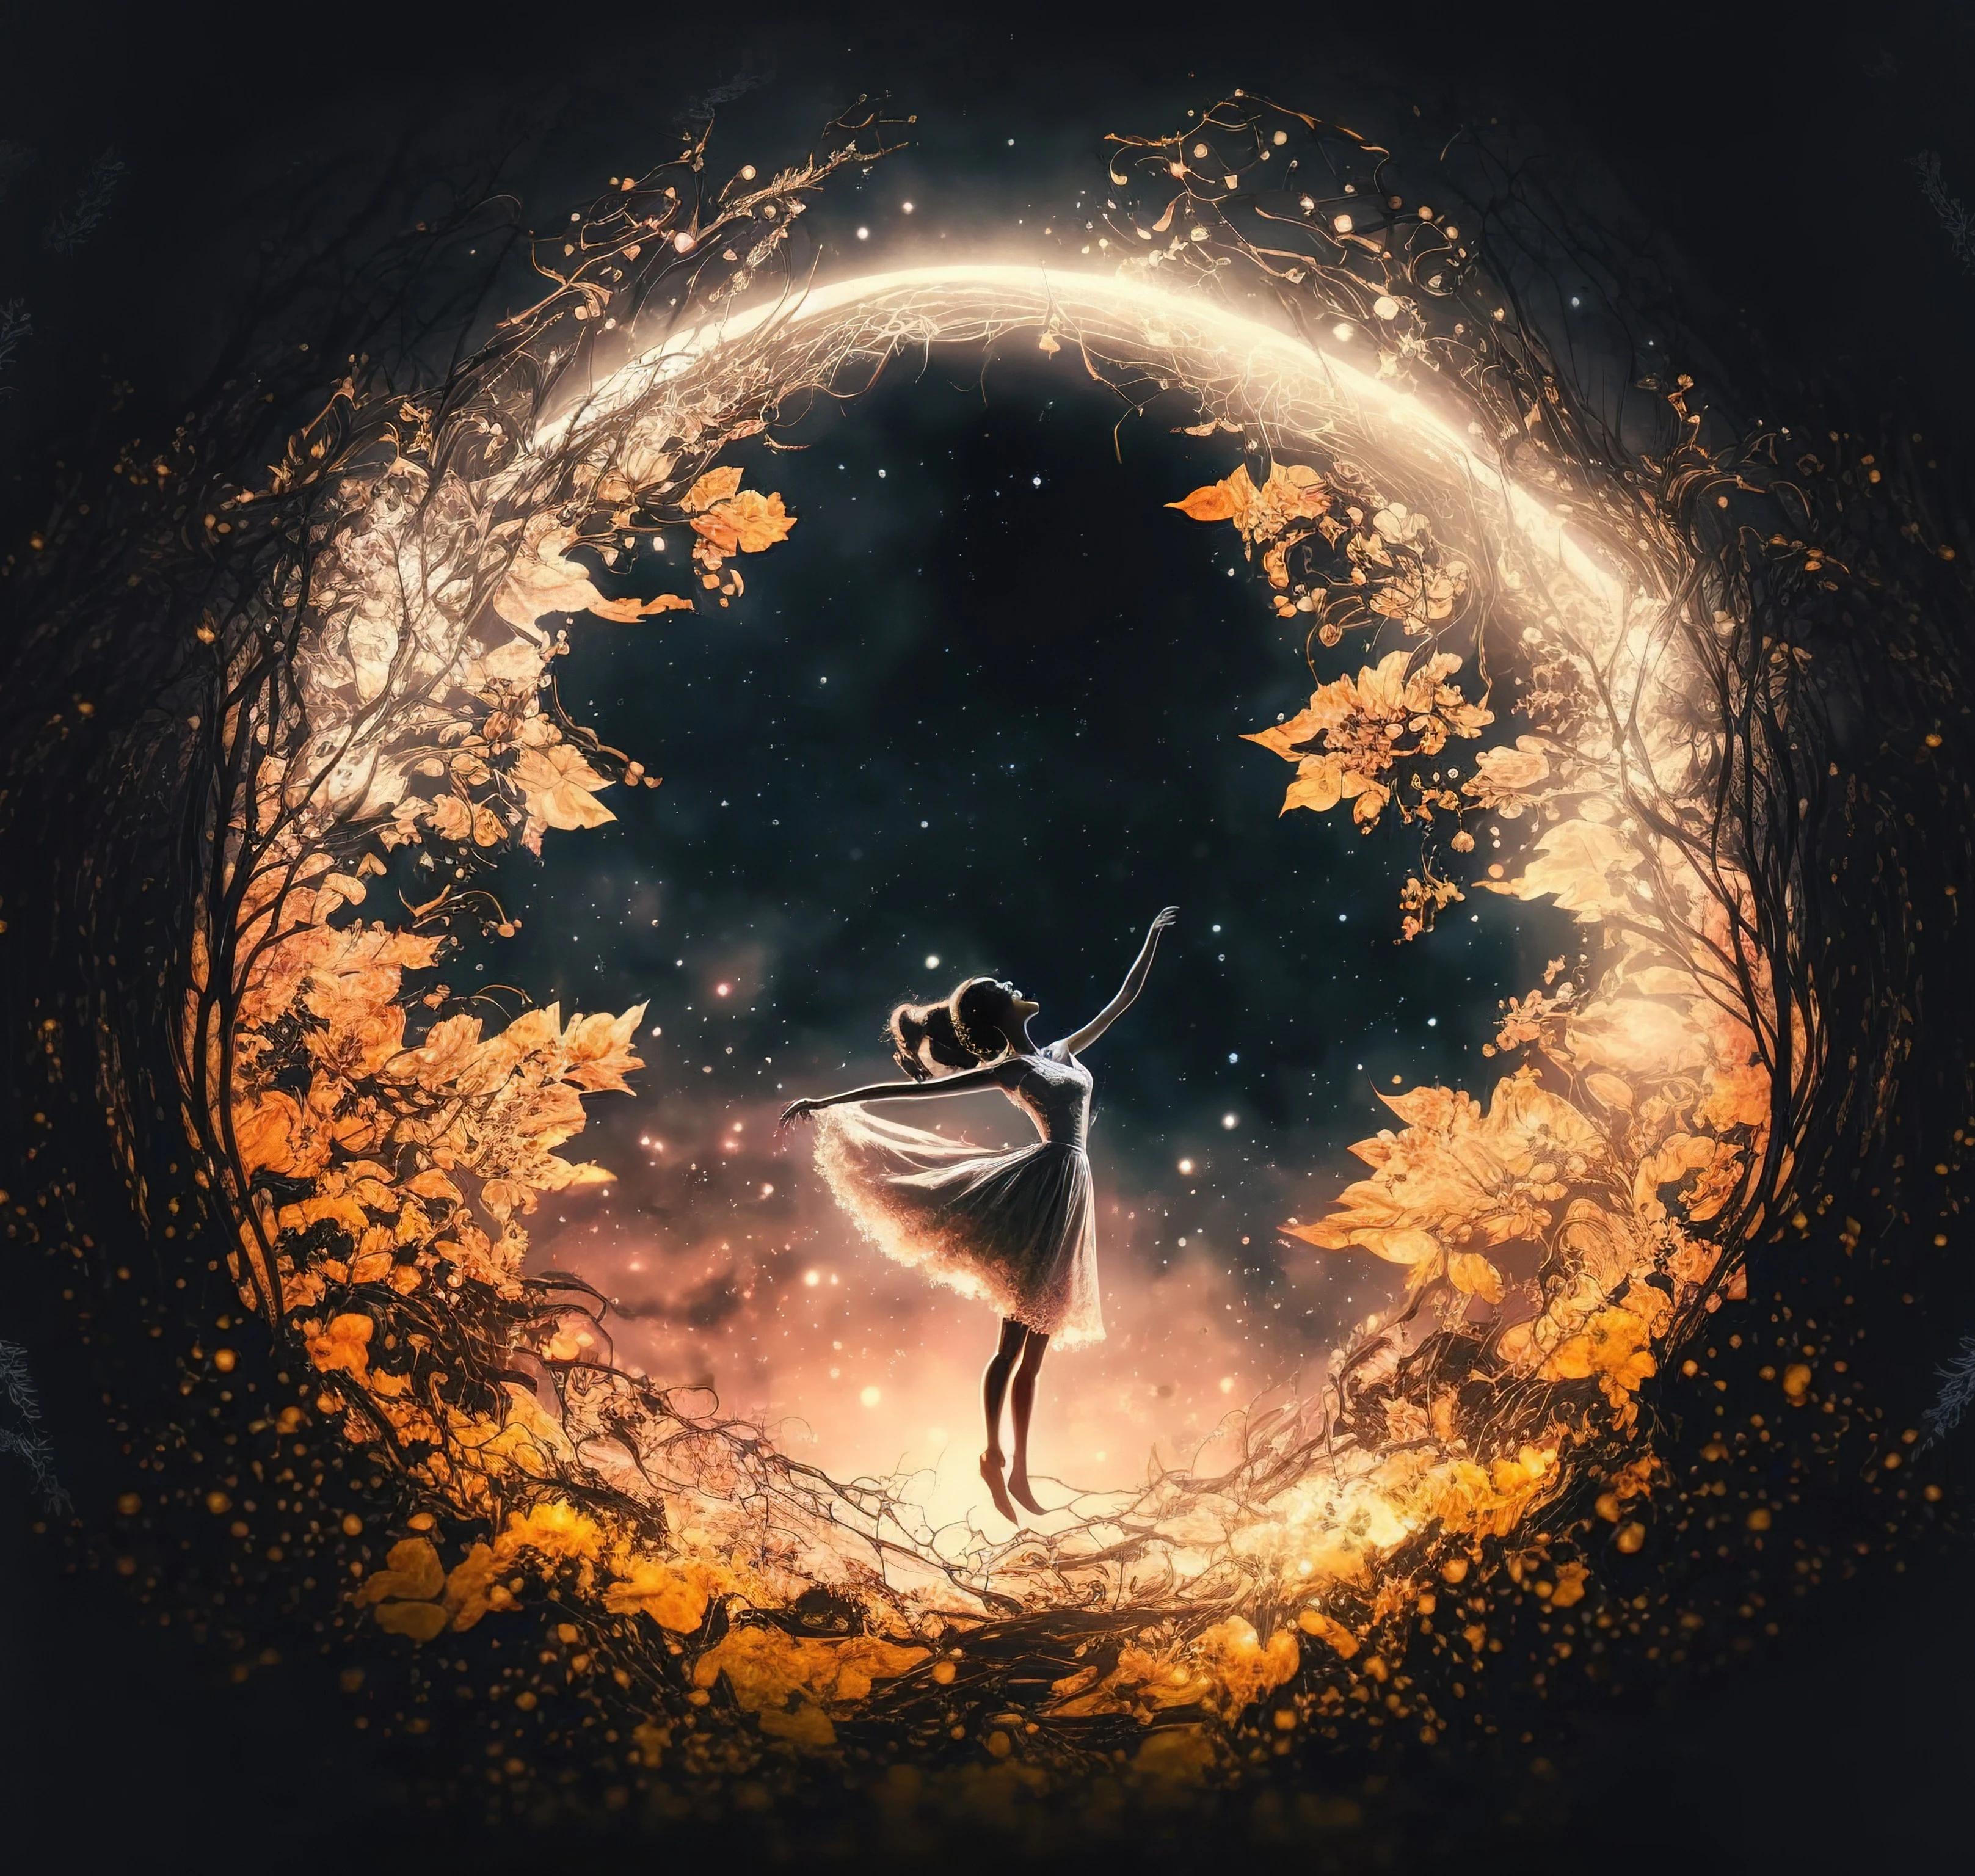 676032343072718-ballerina-dancing-with-fireflies-against-crescent-moon-digital-art-style-illustr-17033327787211.jpg